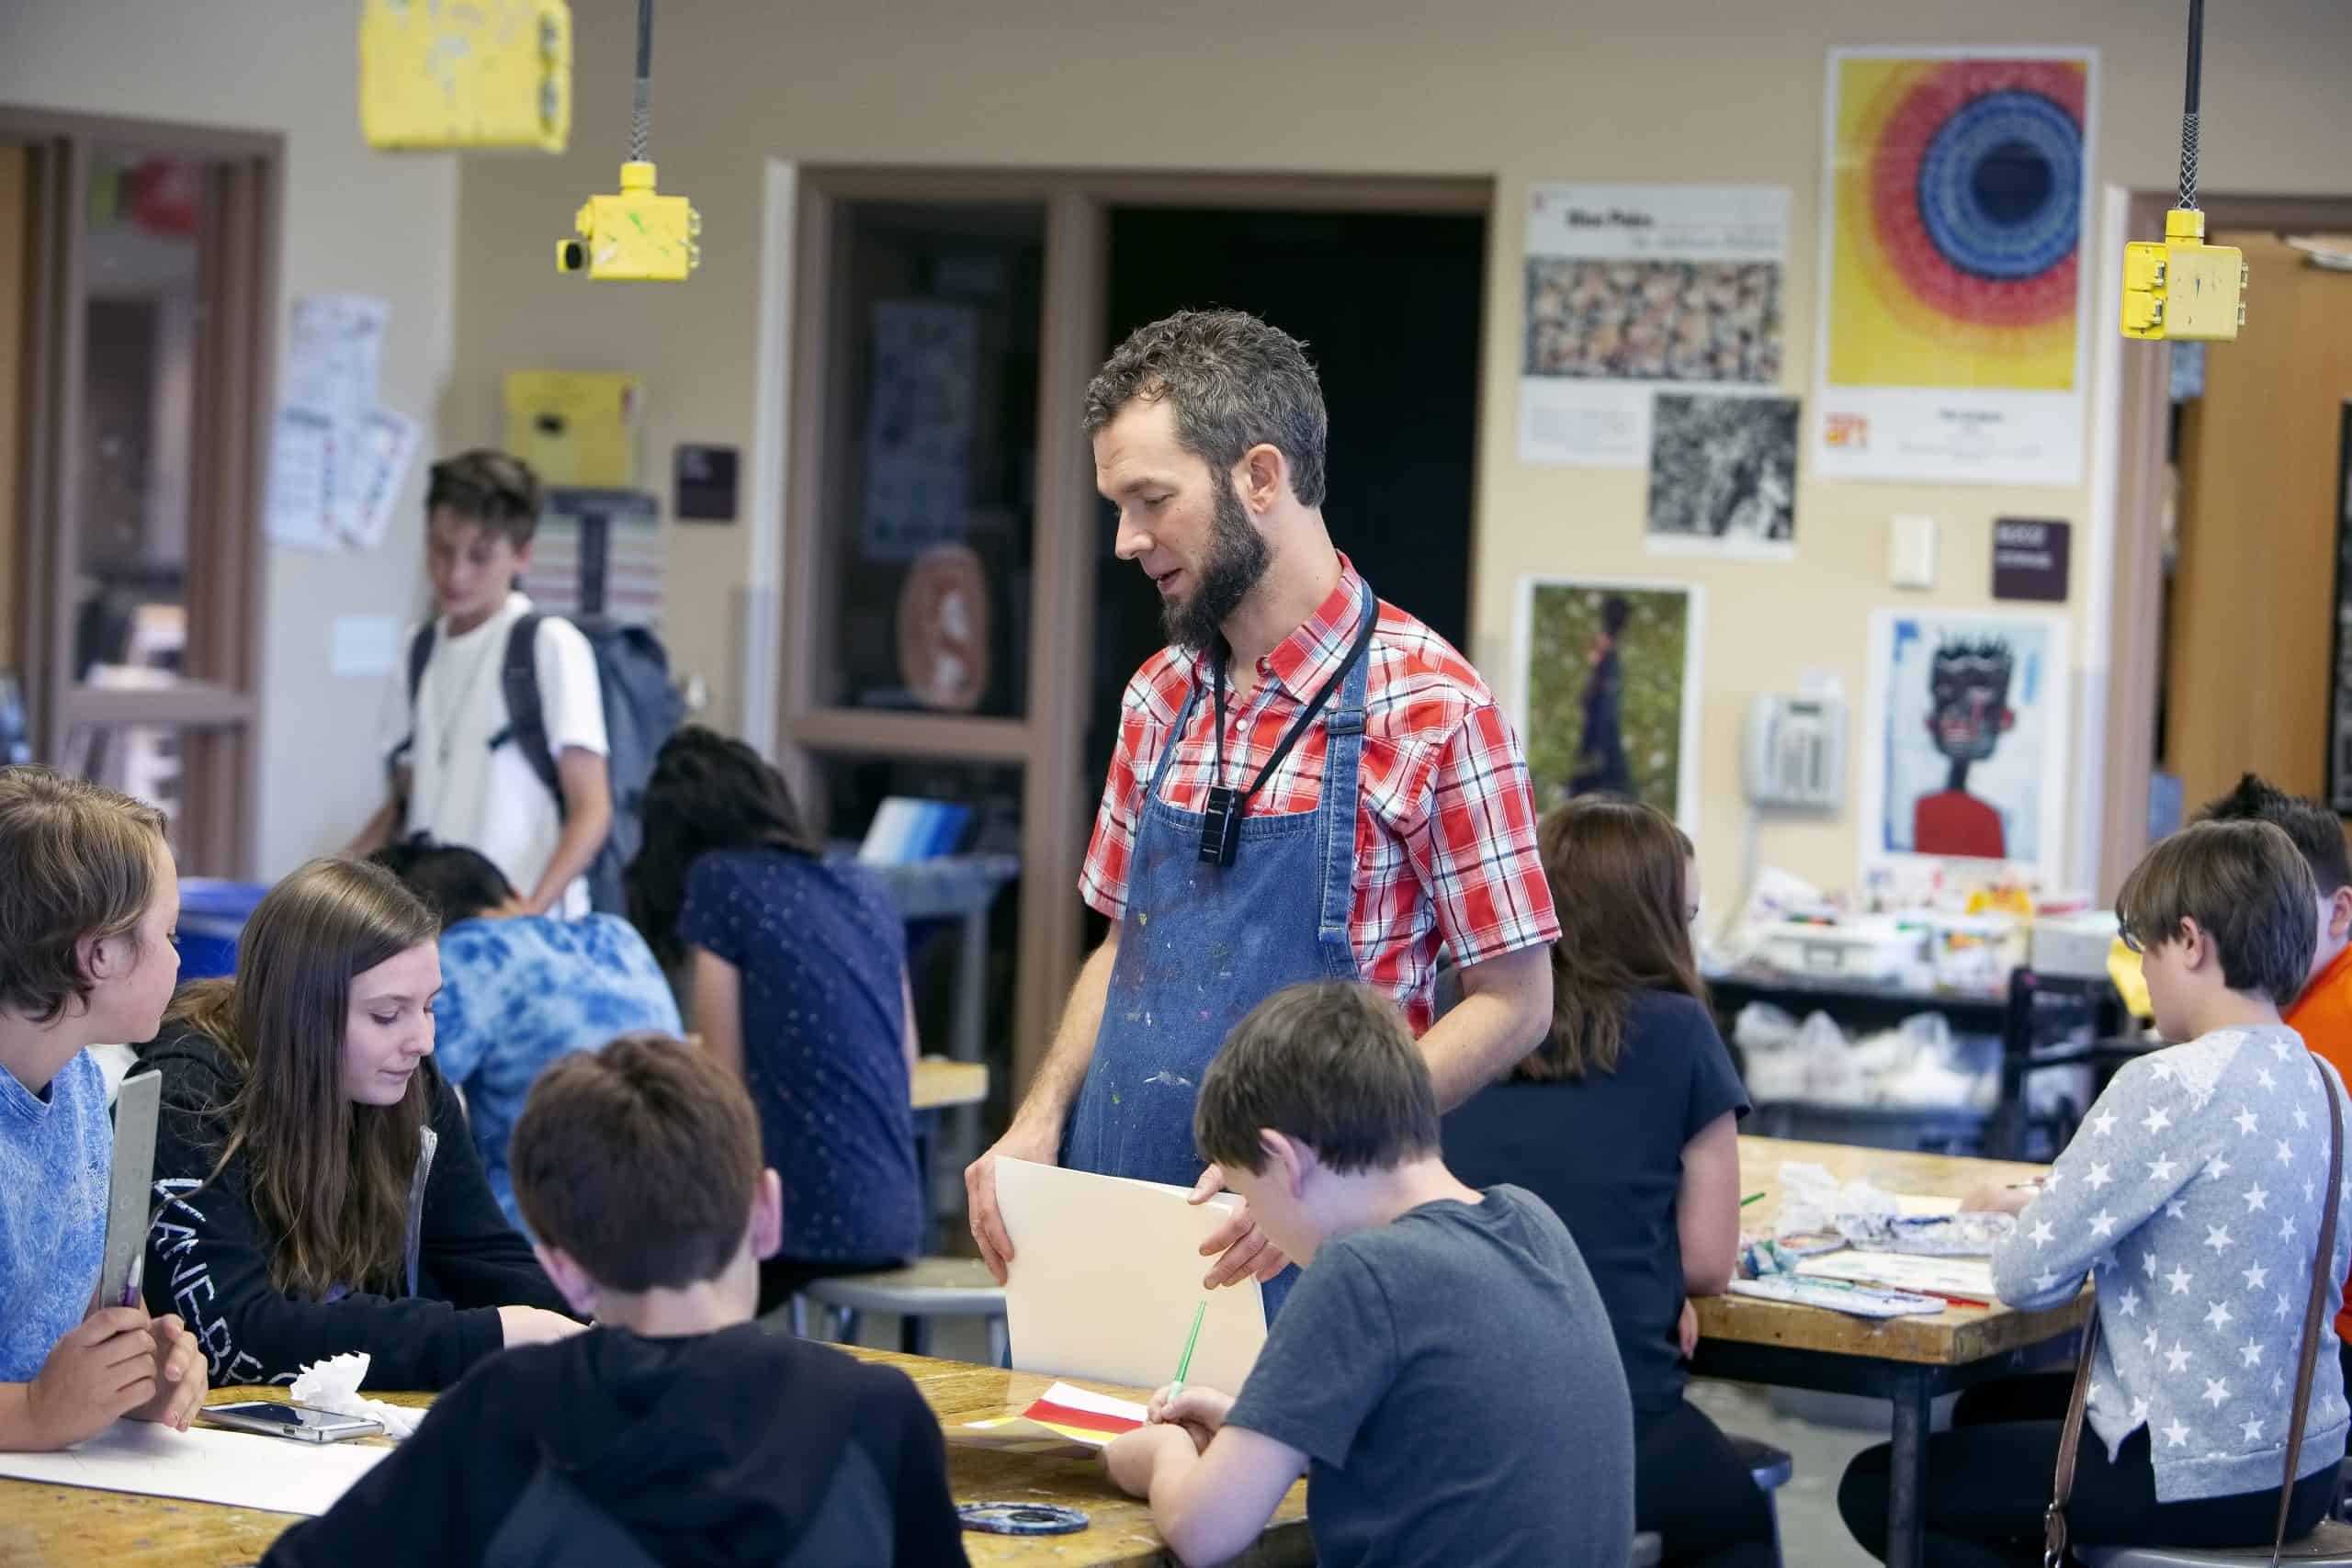 A teacher helping students